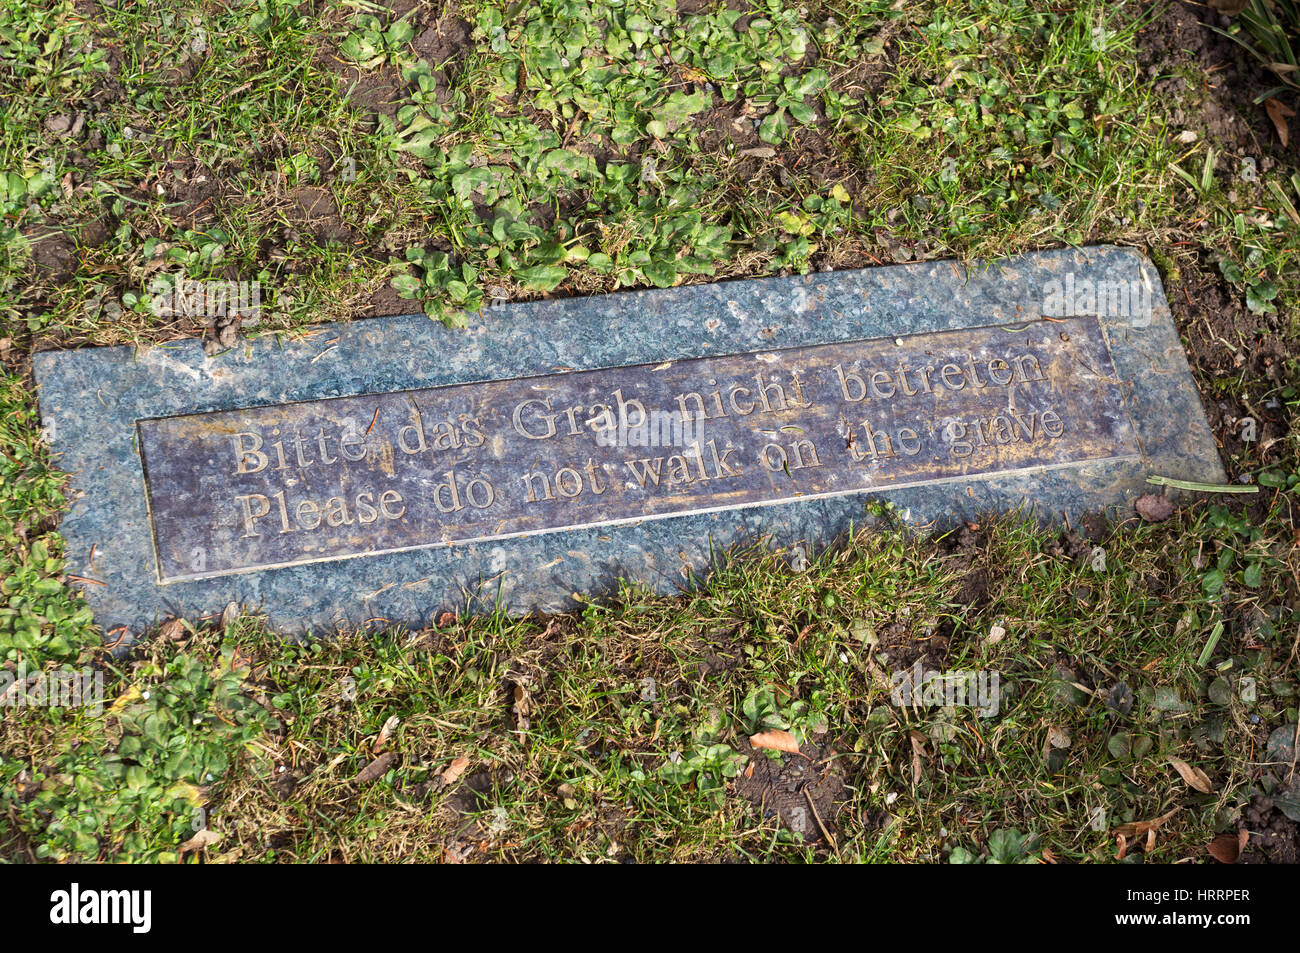 Please do not walk on the Grave -  James Joyce's Grave, Friedhof Fluntern, Zurich Stock Photo